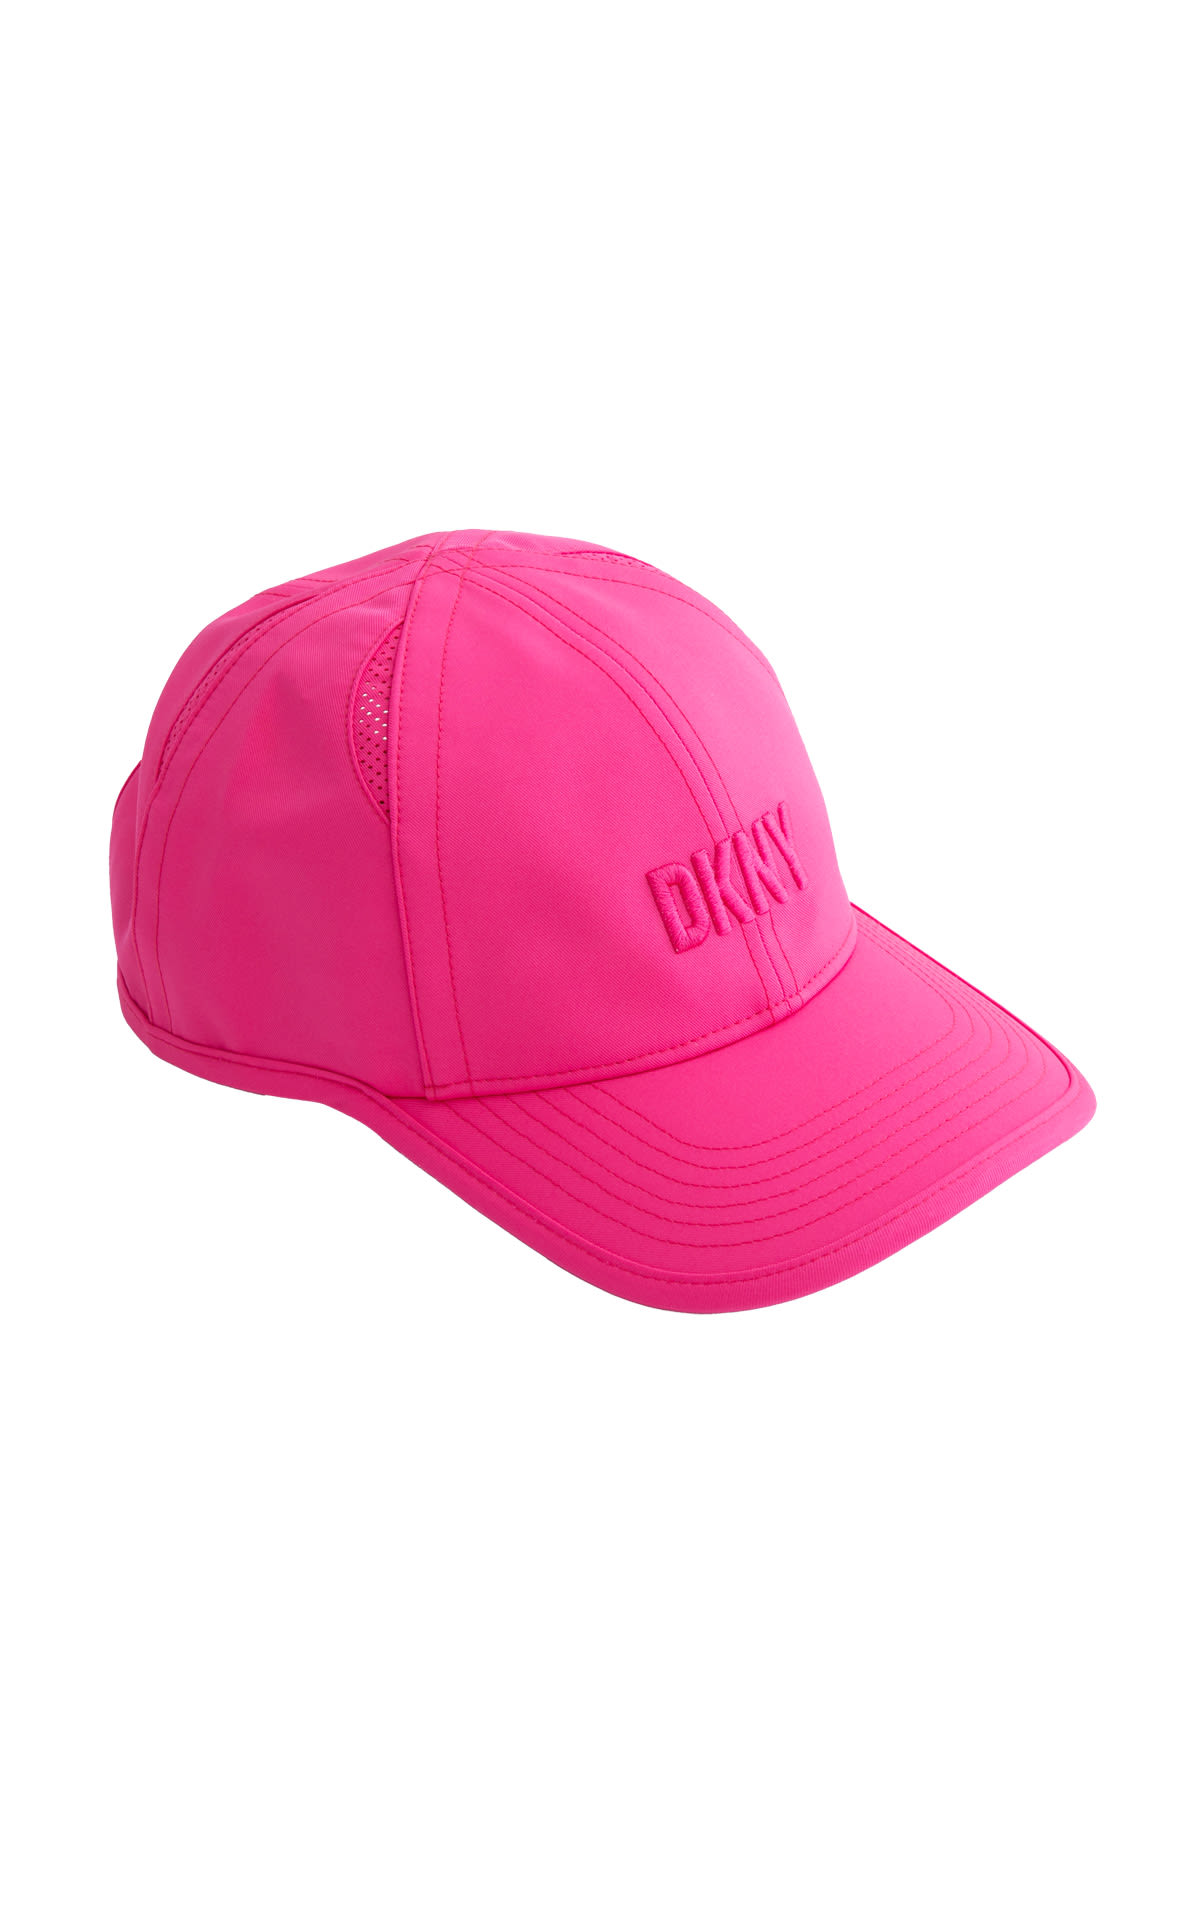 Pink baseball cap DKNY